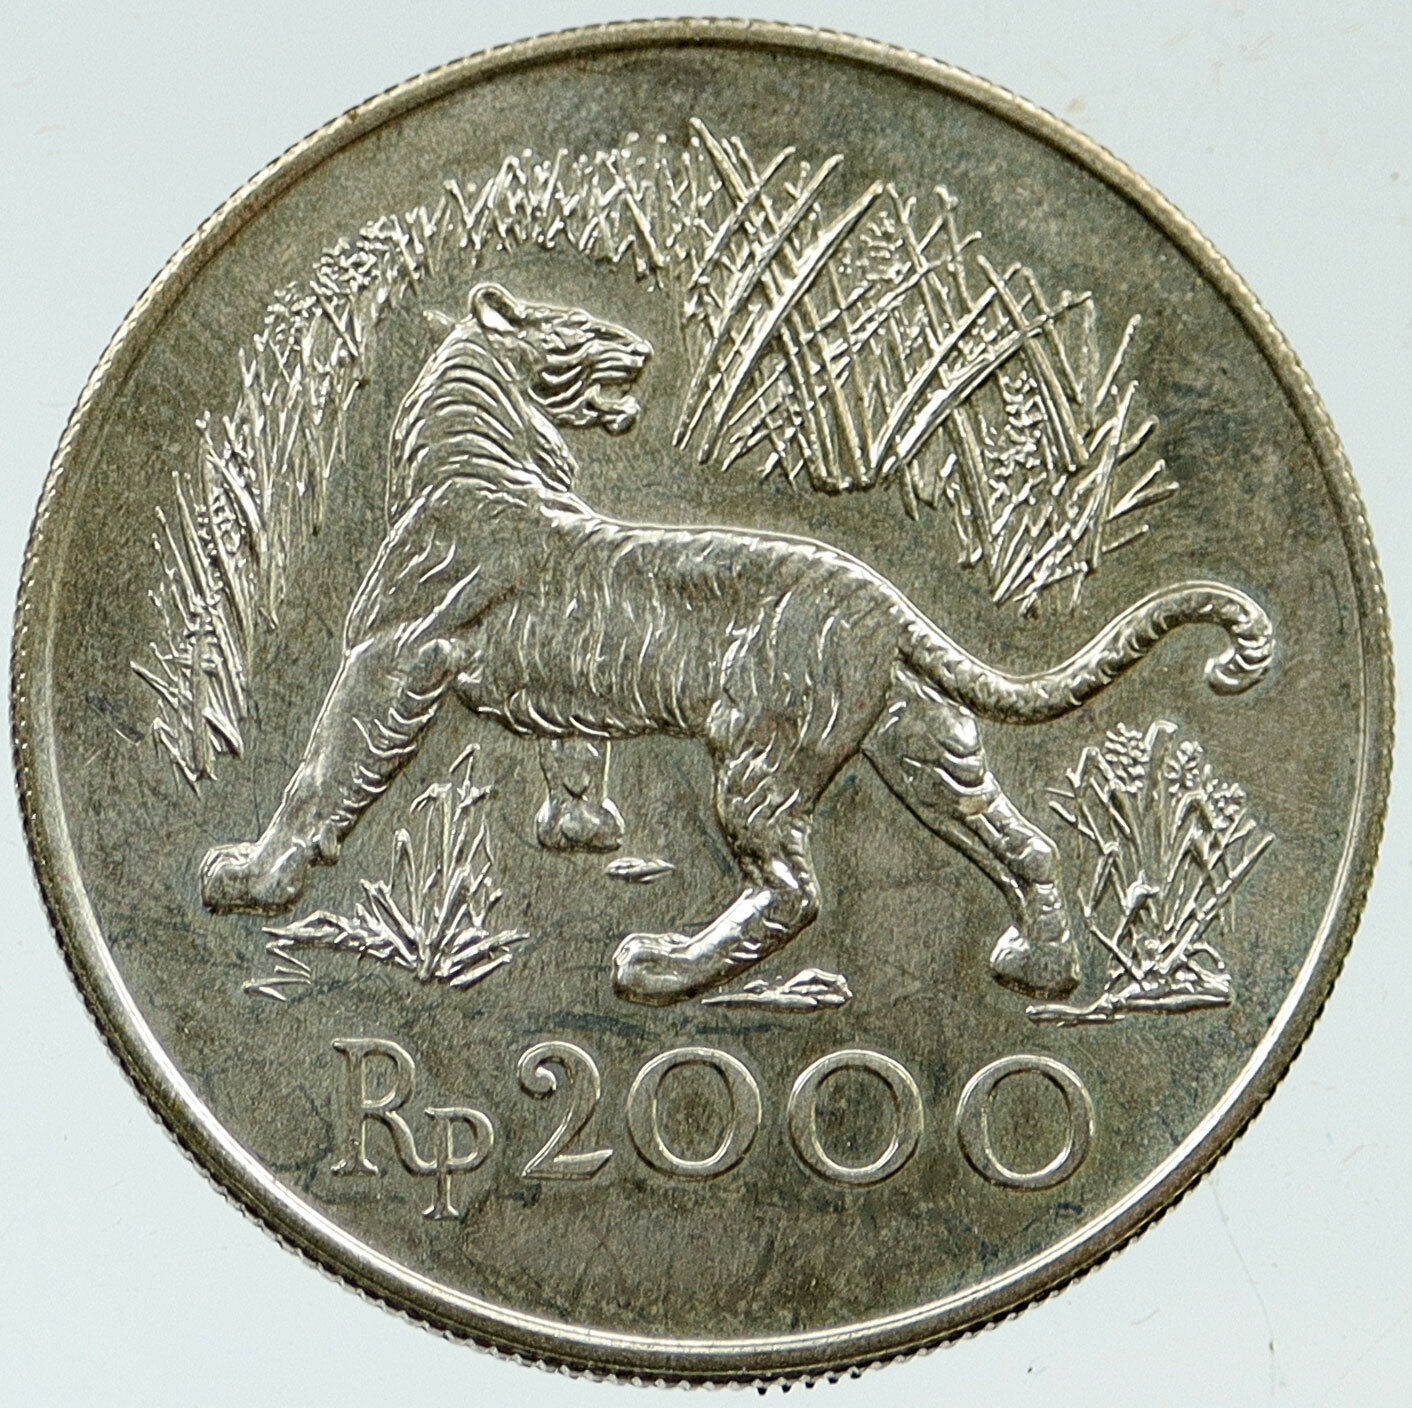 1974 INDONESIA Bank JAVAN TIGER Nature Animals Silver 2000 Rupiah Coin i116954